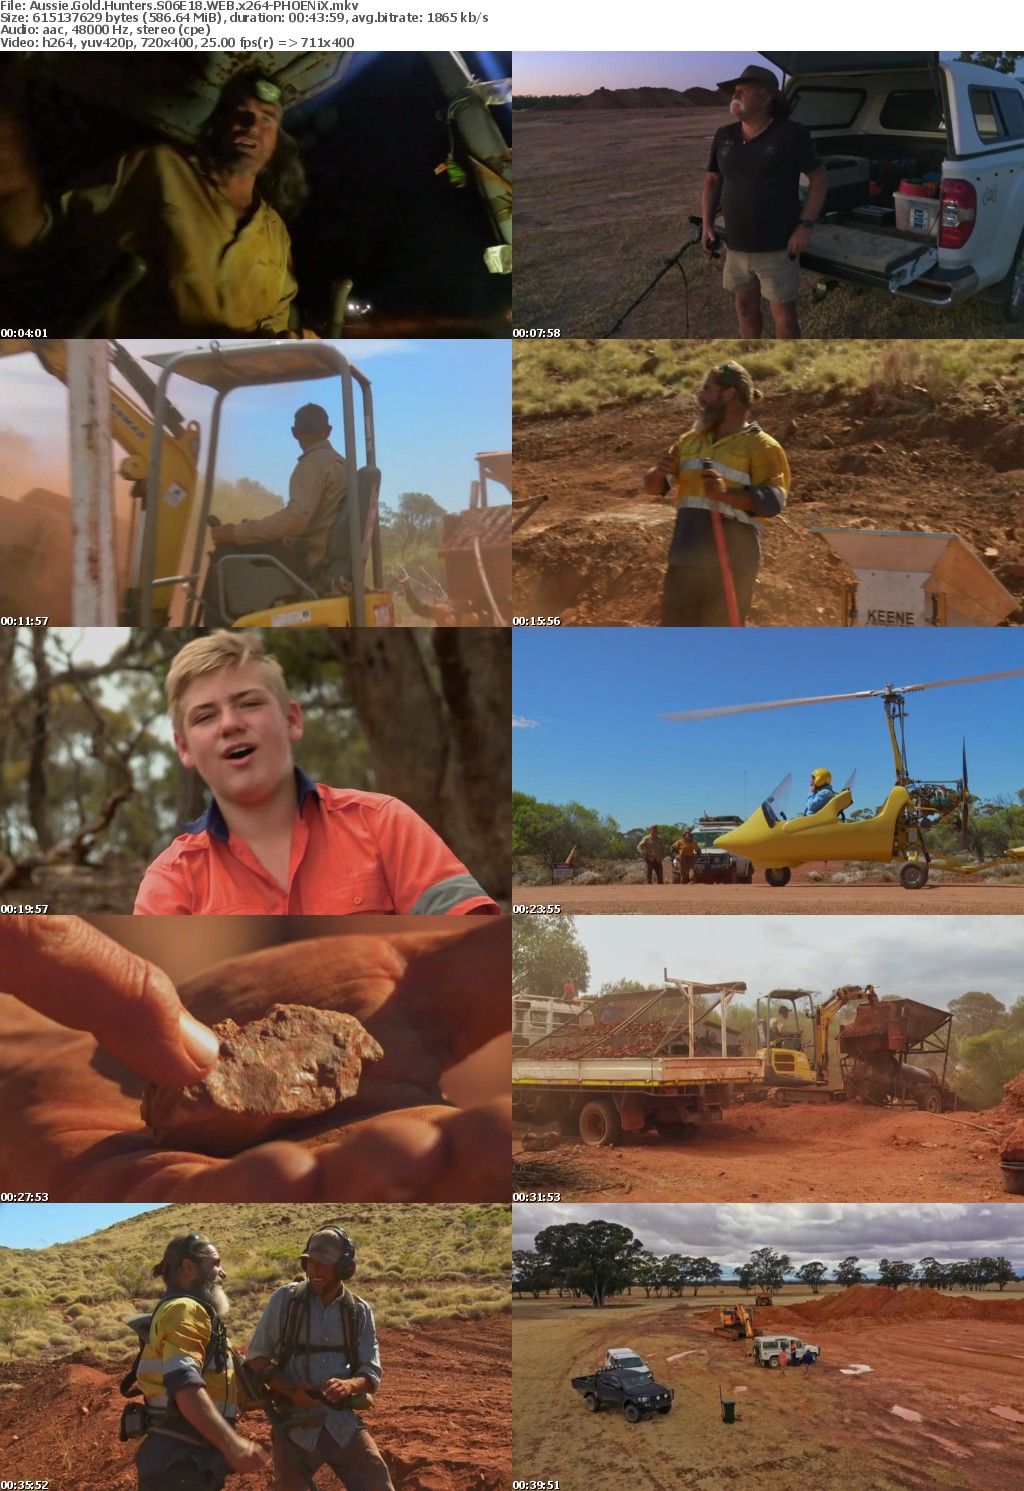 Aussie Gold Hunters S06E18 WEB x264-PHOENiX